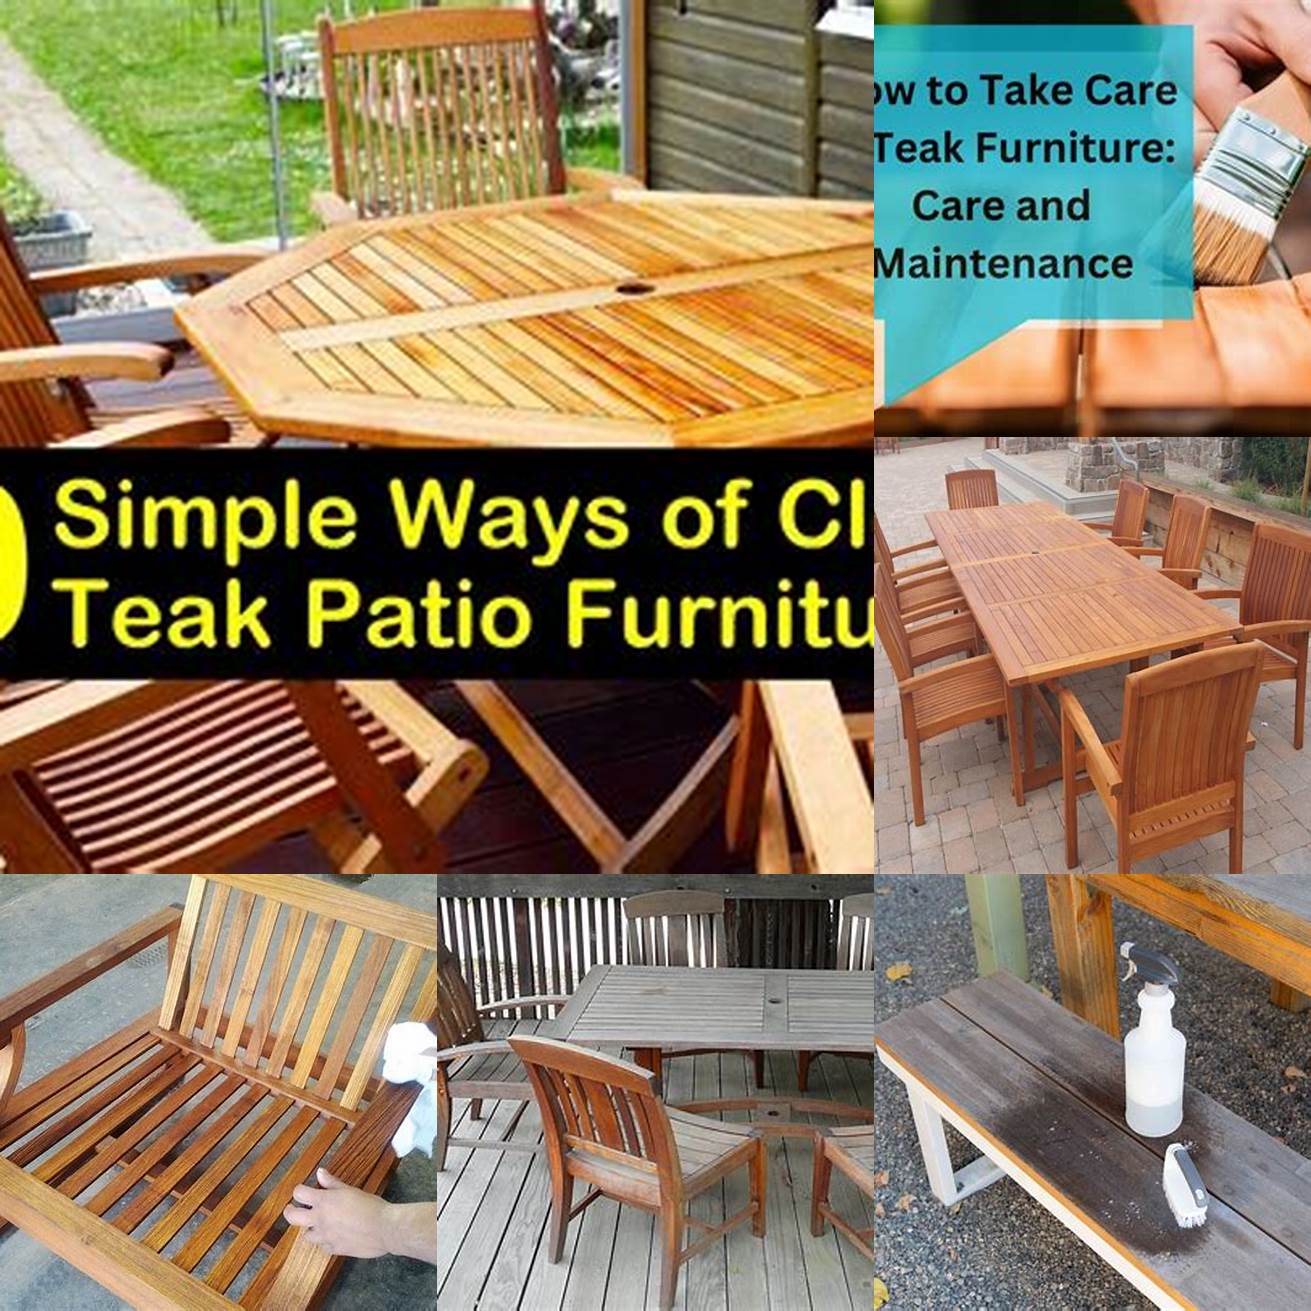 Care and maintenance of teak wood